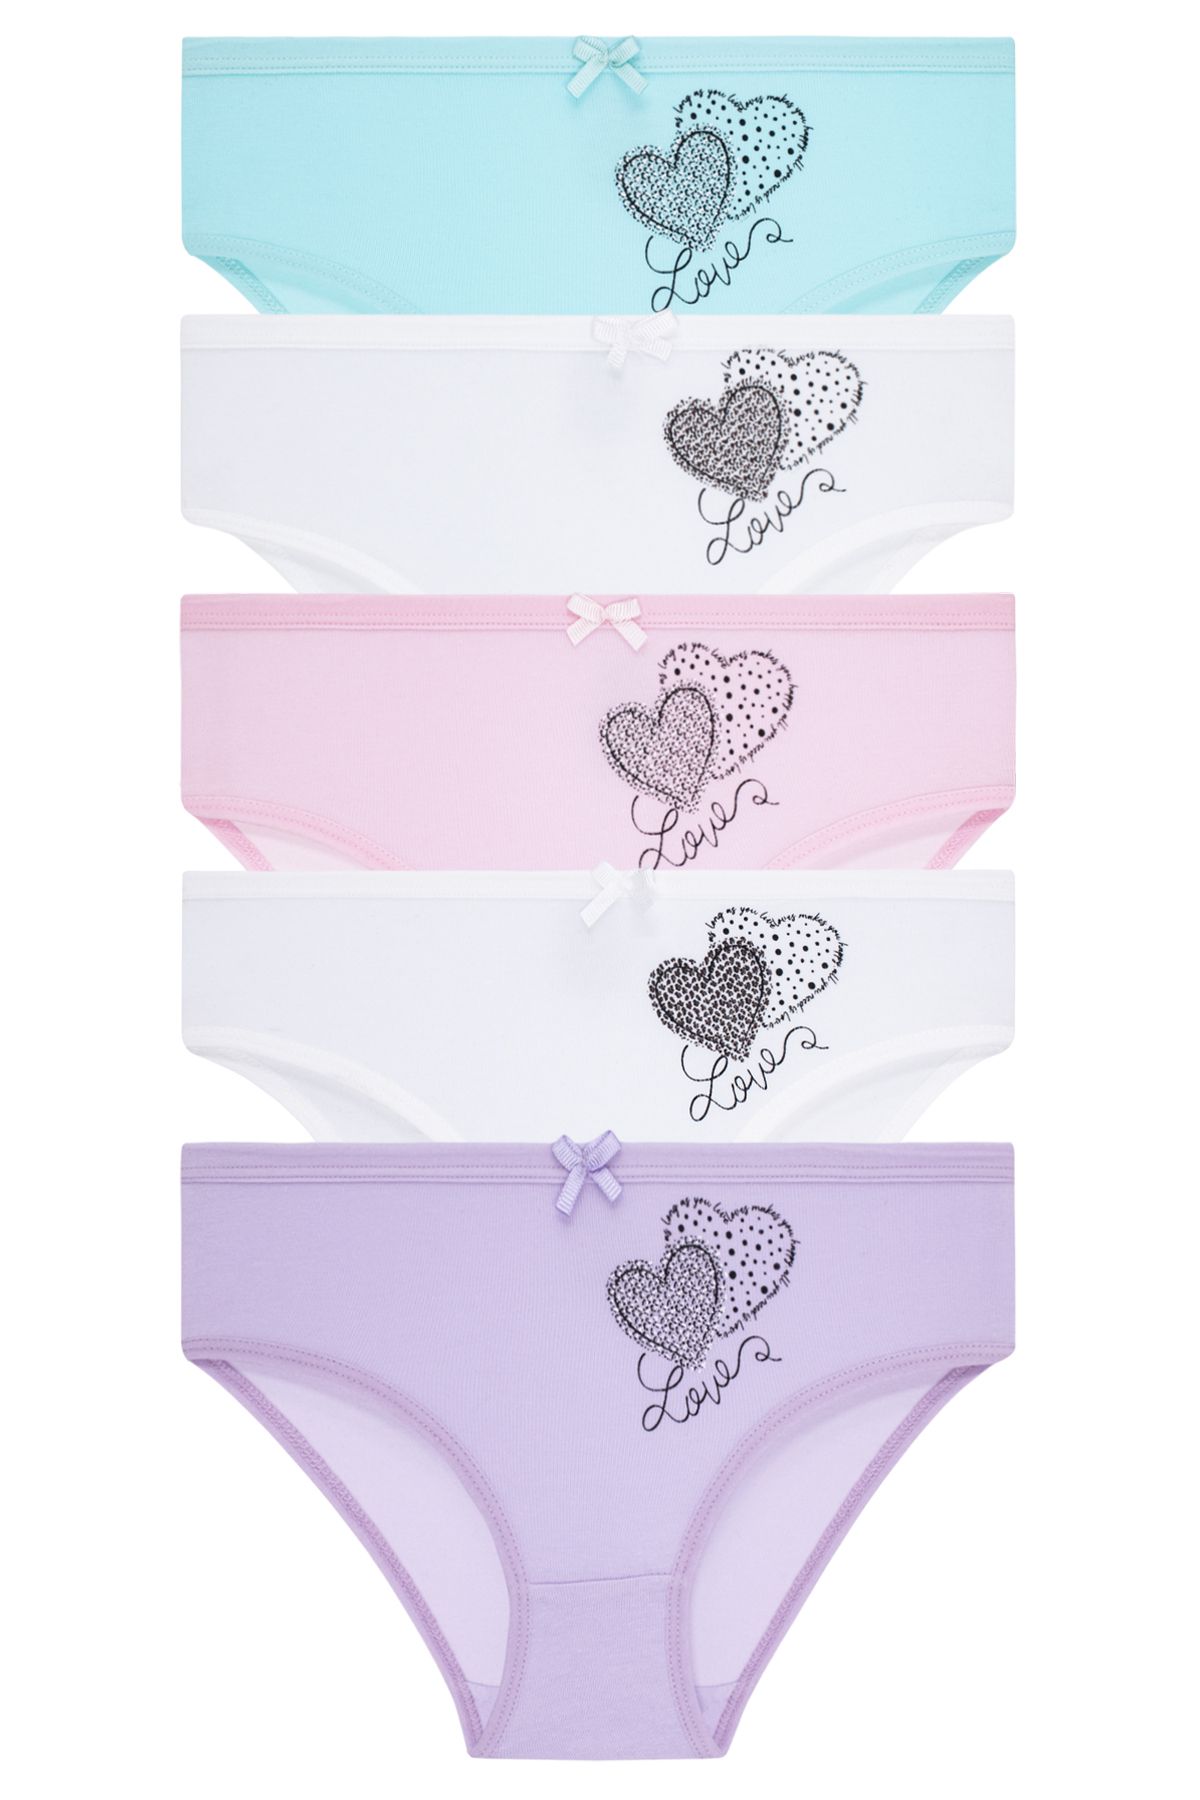 biyokids Girl's 5 Pack Colorful Slip Panties - Hearts 